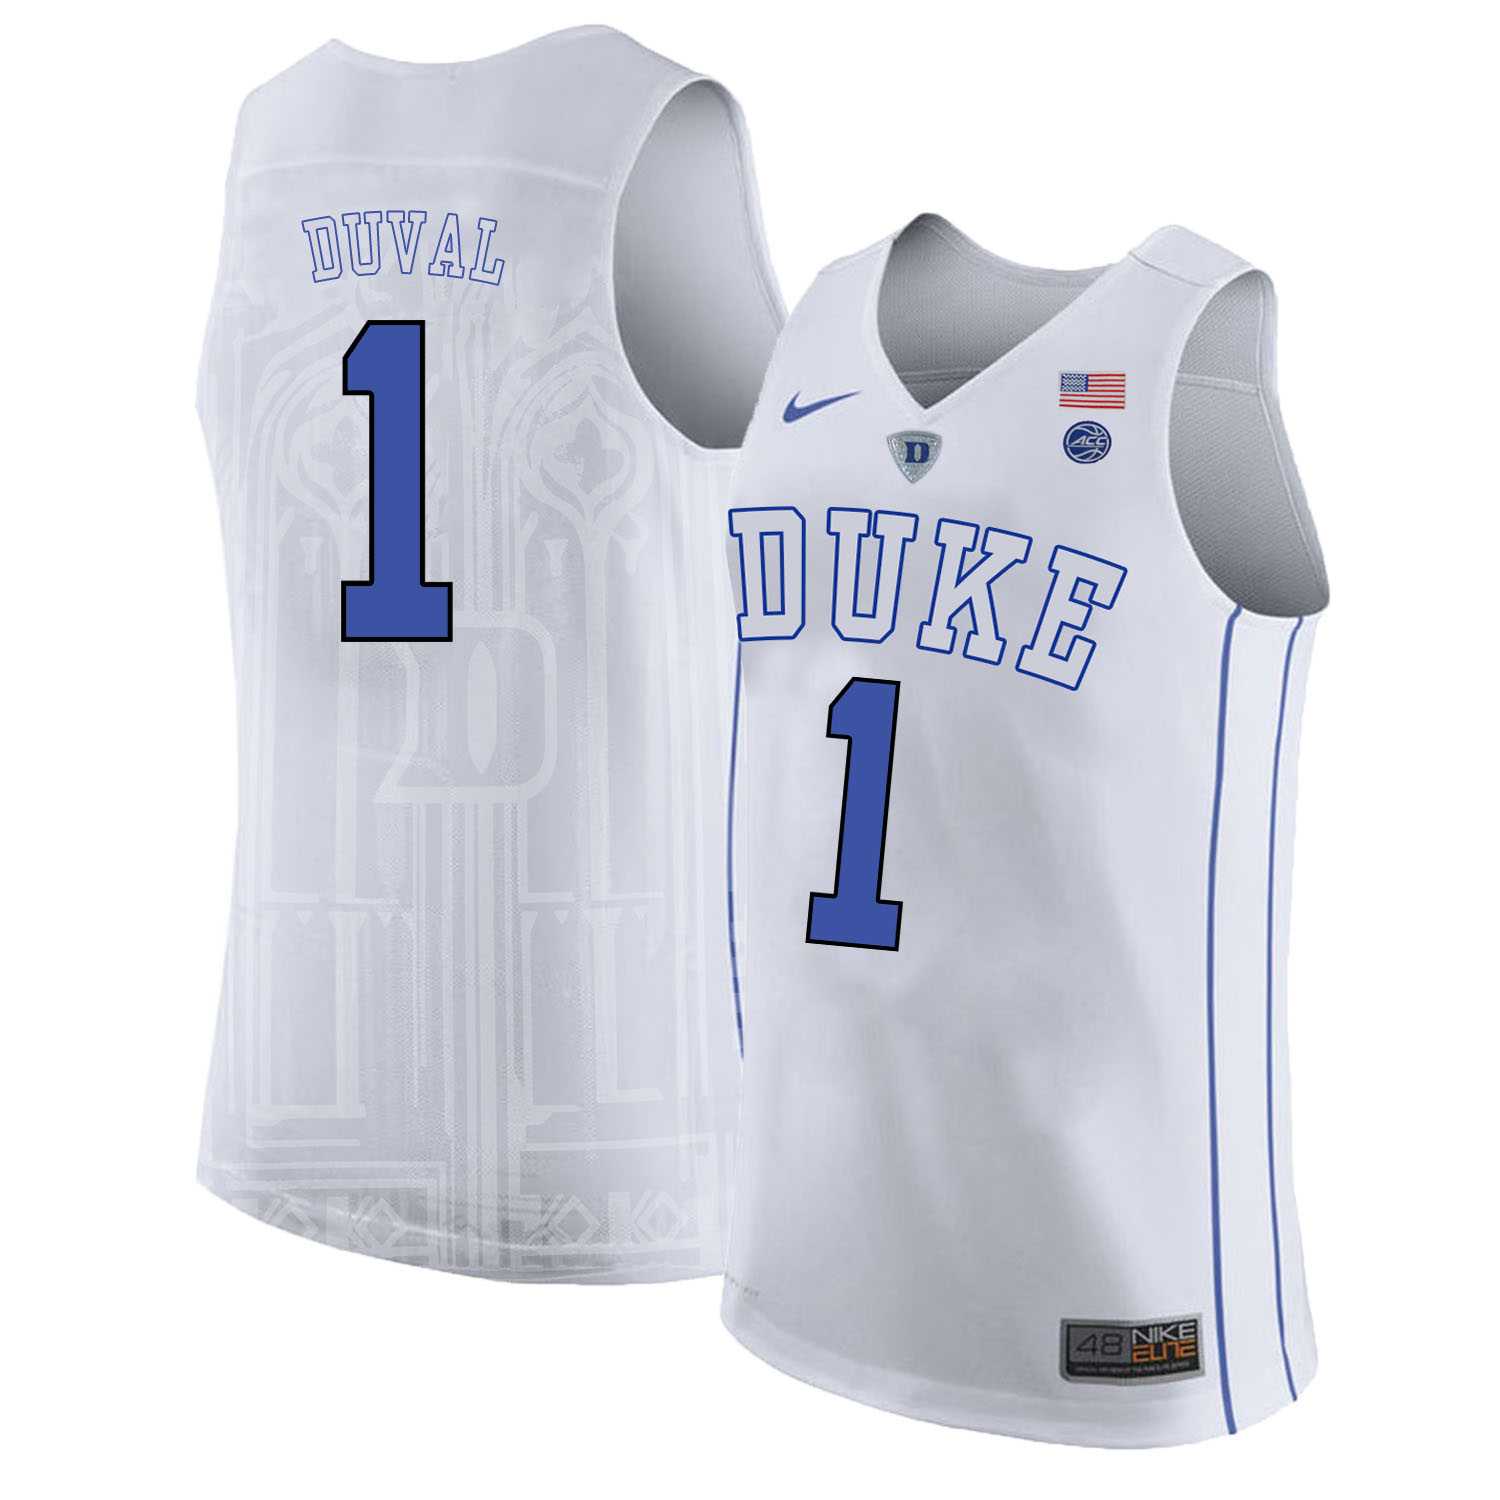 Duke Blue Devils 1 Trevon Duval White Nike College Basketabll Jersey Dyin